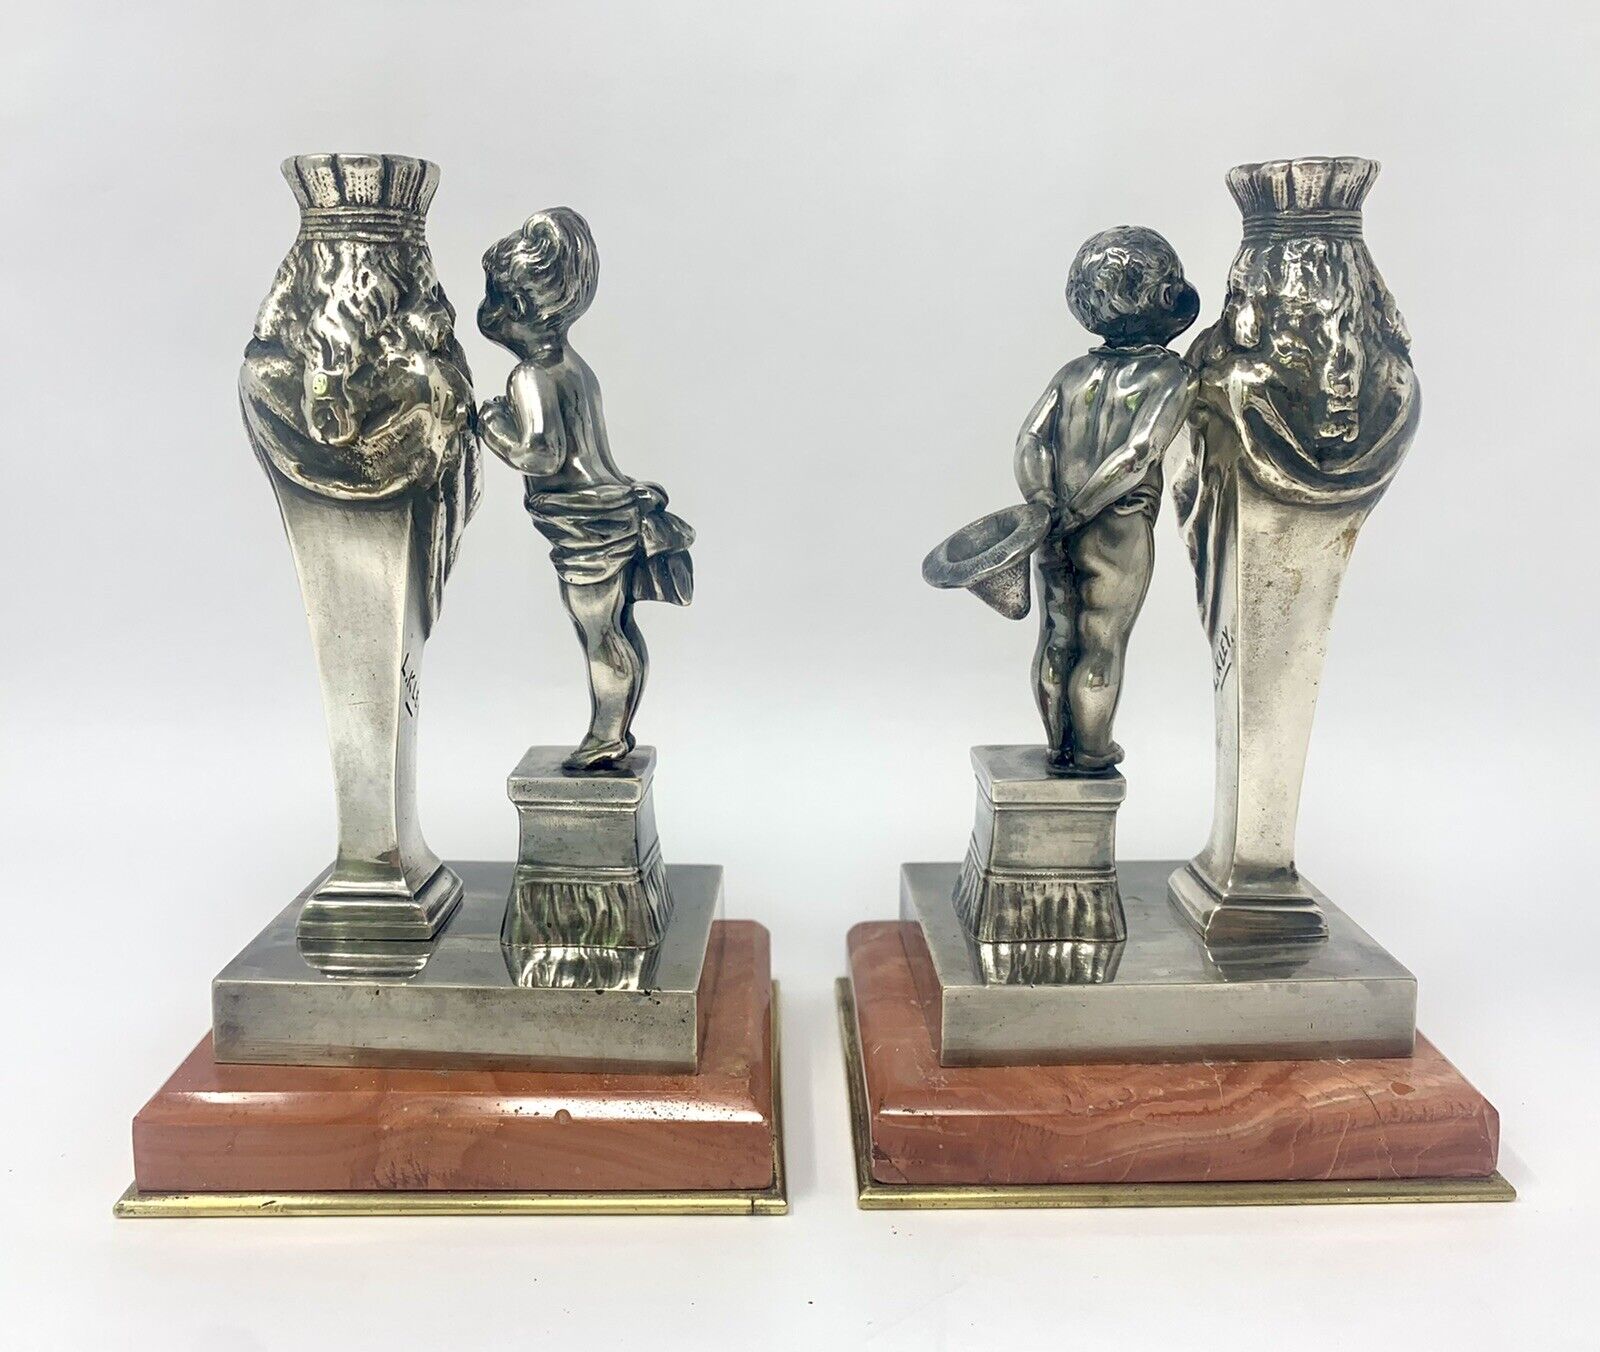  Rare Pair of antique French figural bronze candlesticks by Louis Kley Без бренда - фотография #2